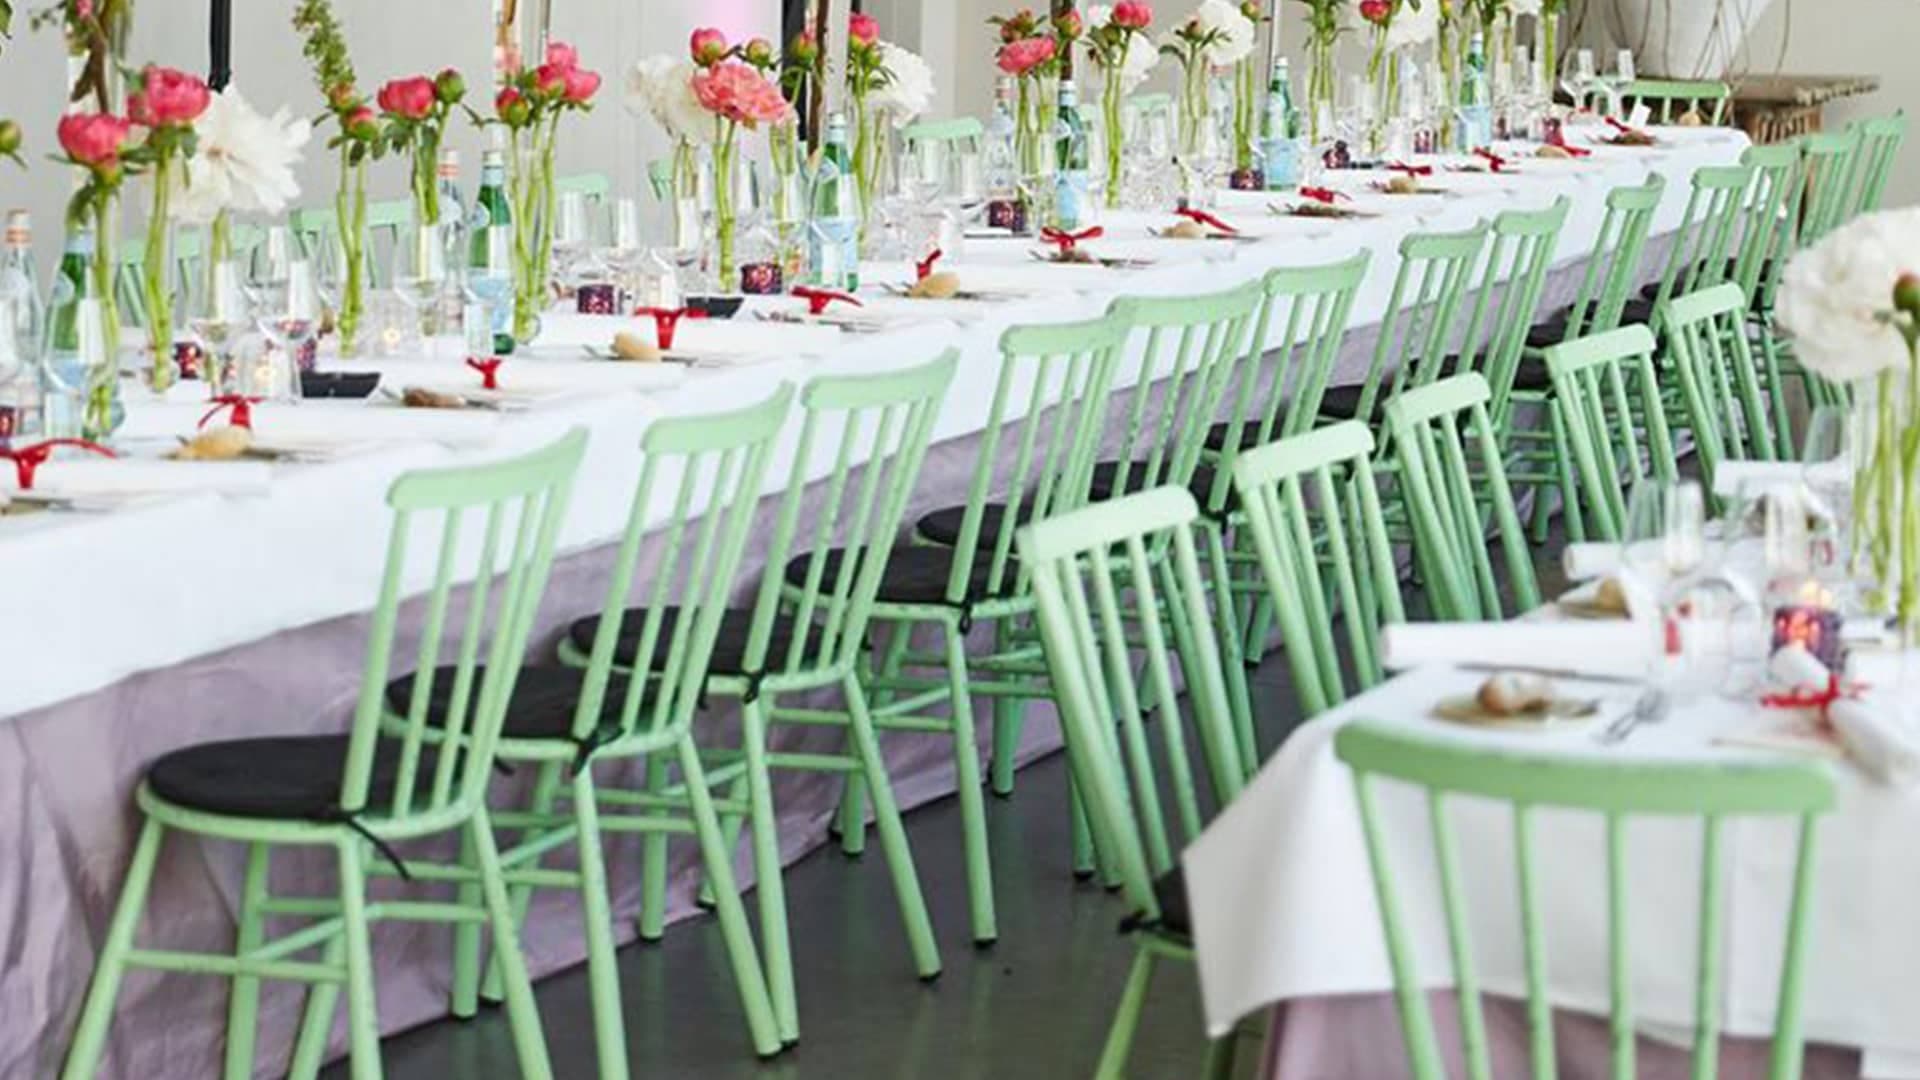 727-H45-ALU Indoor & Outdoor Wedding Party Banquet Tiffany Chiavari Rental Event Chair